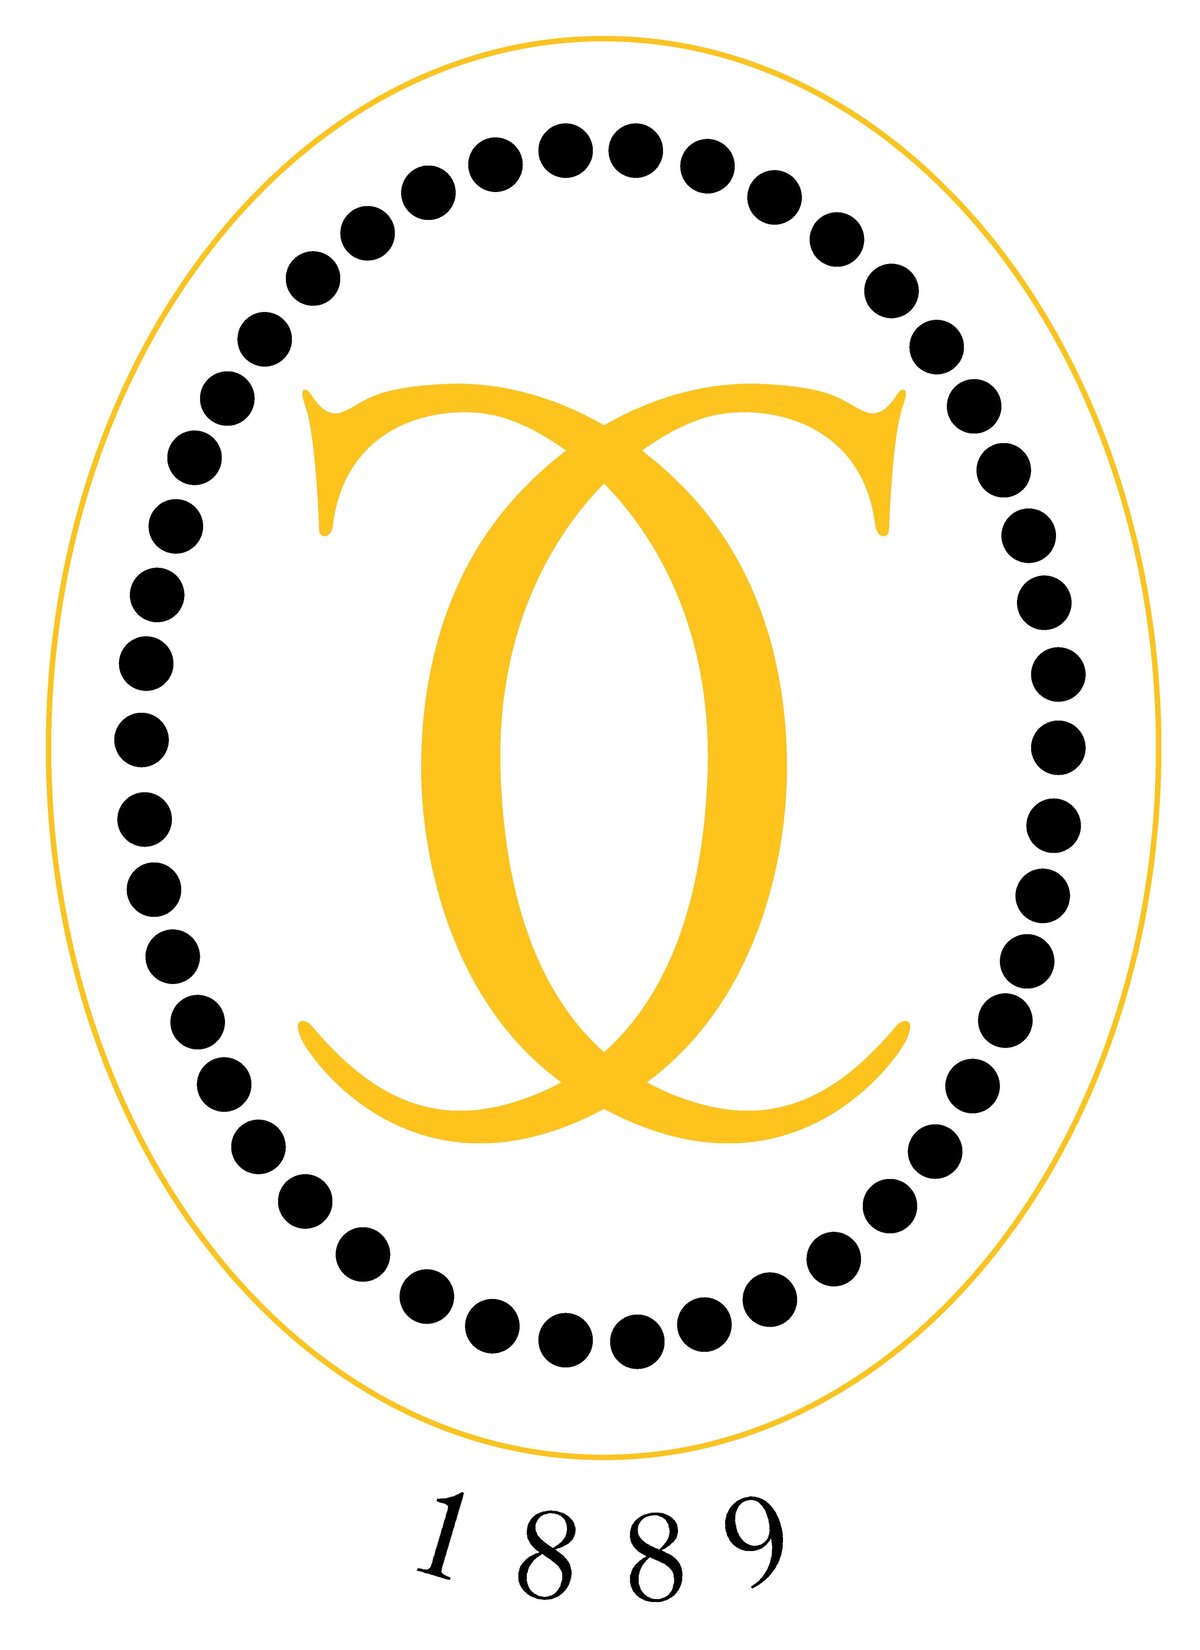 The CC_logo_blackgold